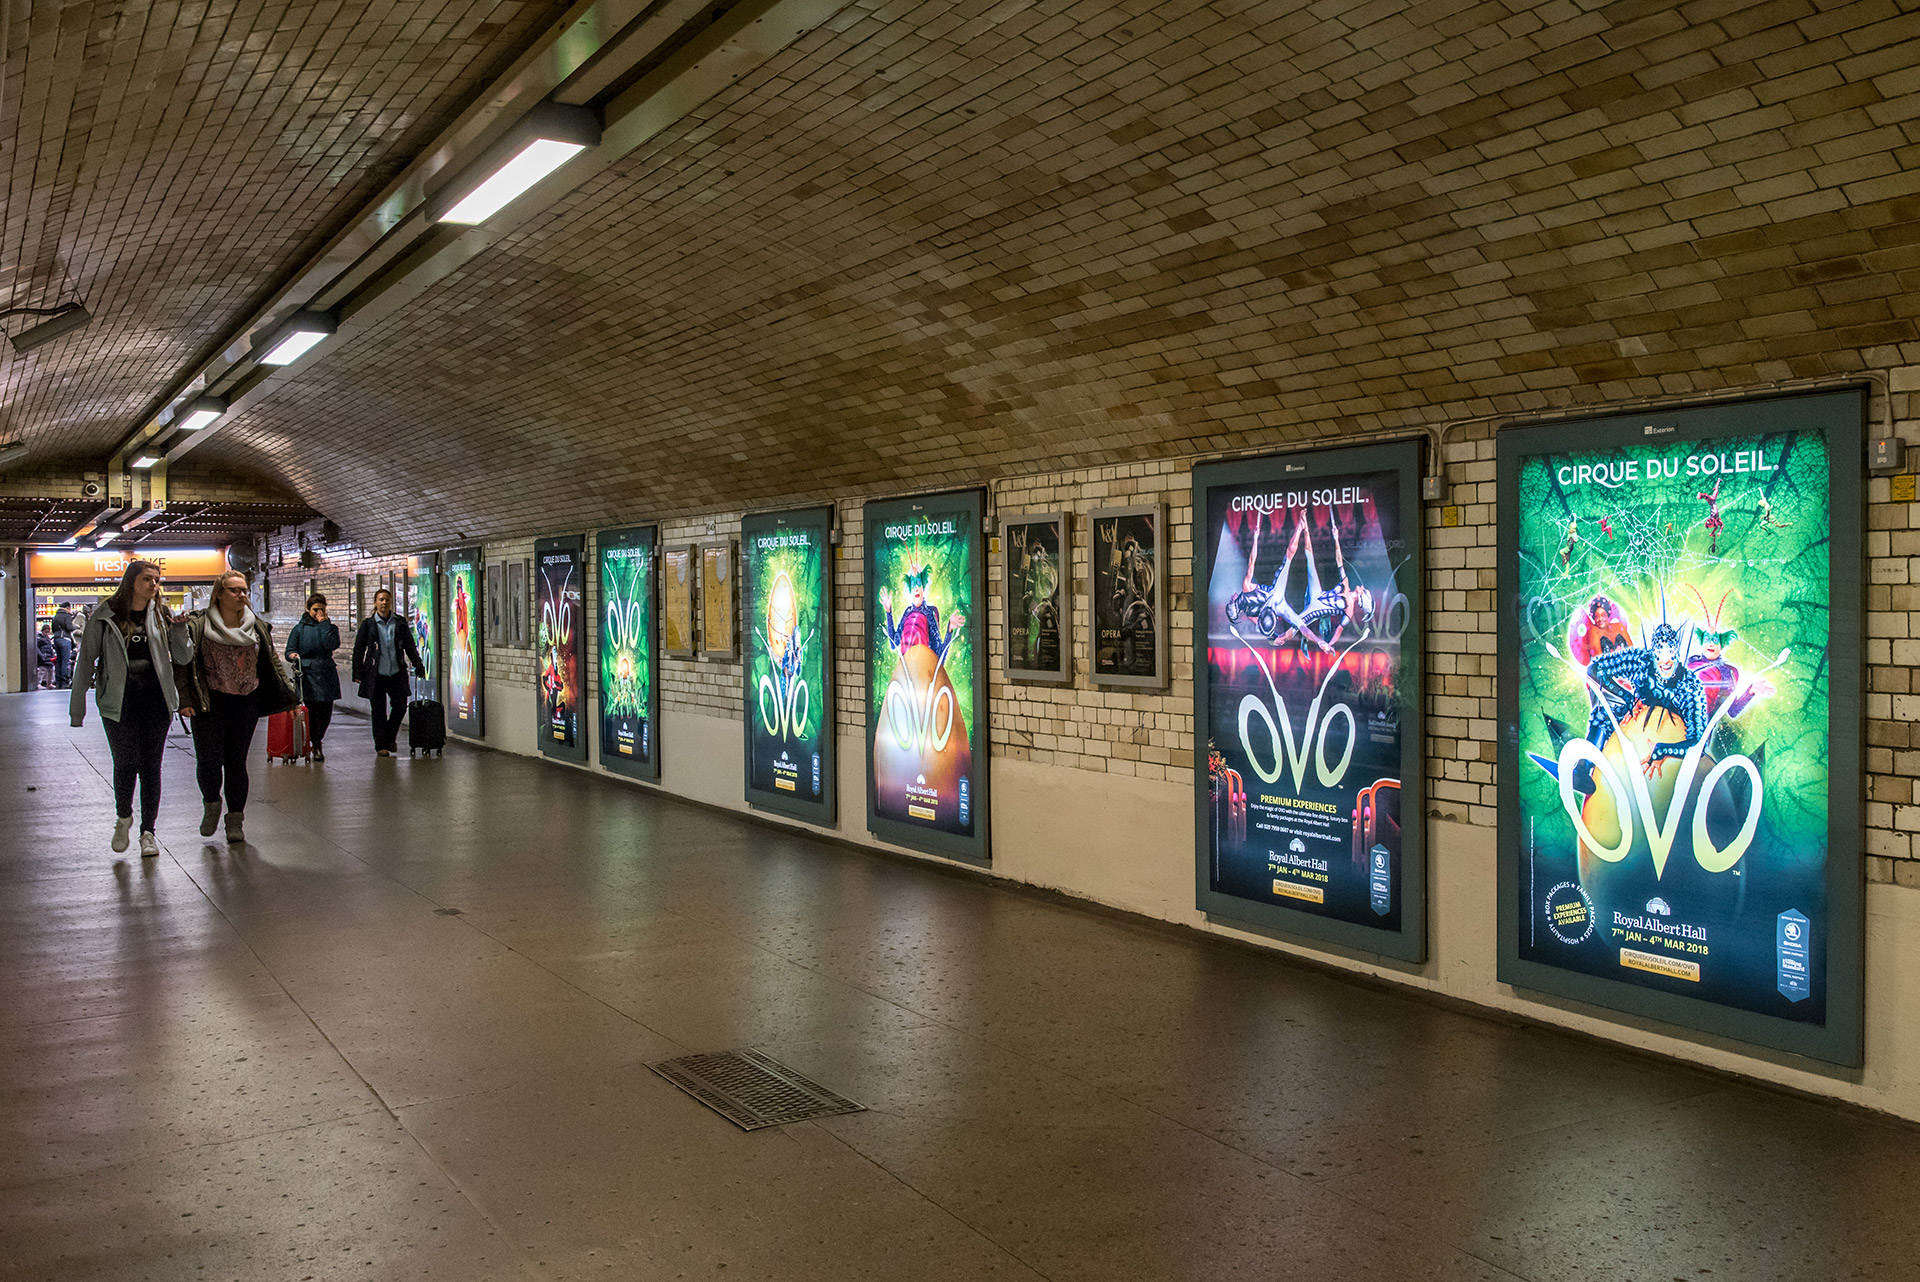 4 Sheets London Underground Advertising